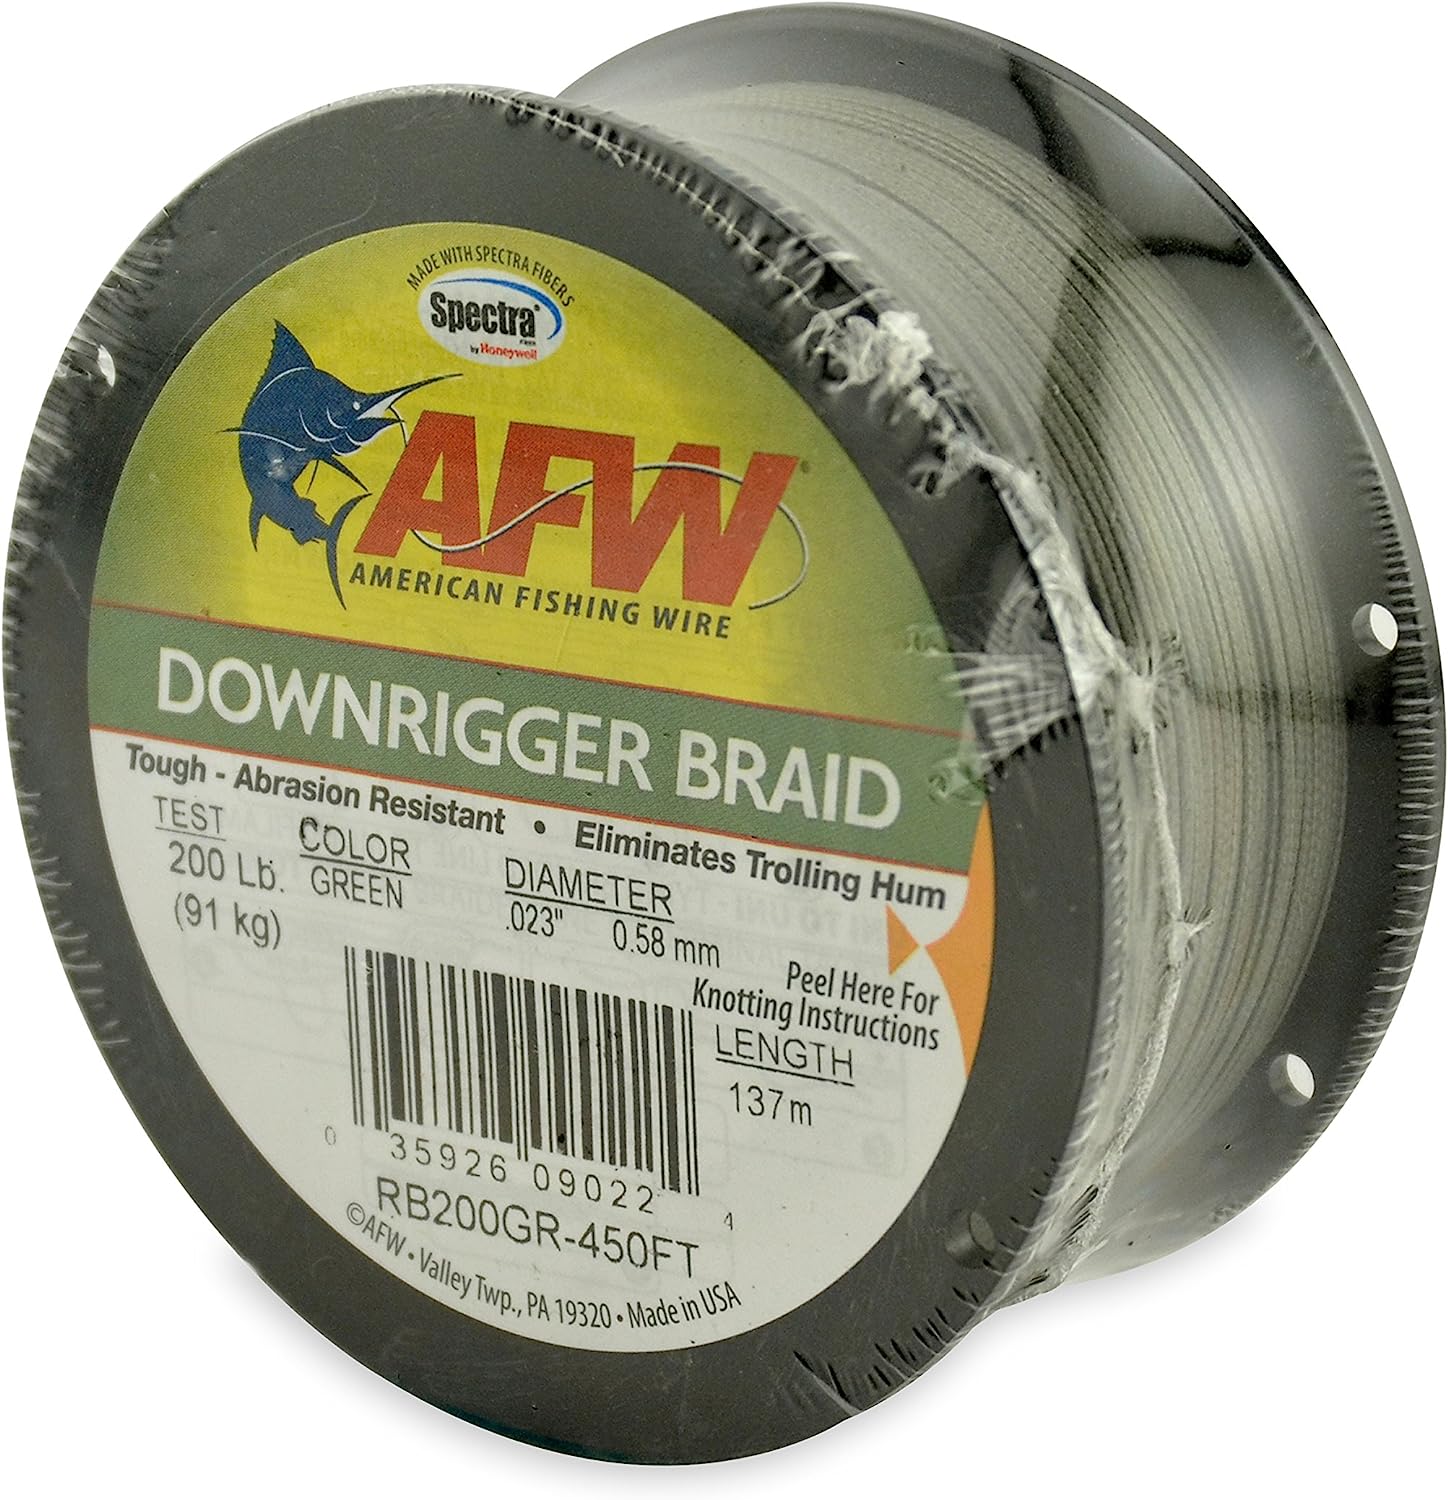 American Fishing Wire Downrigger Braid (Spectra Fibers)